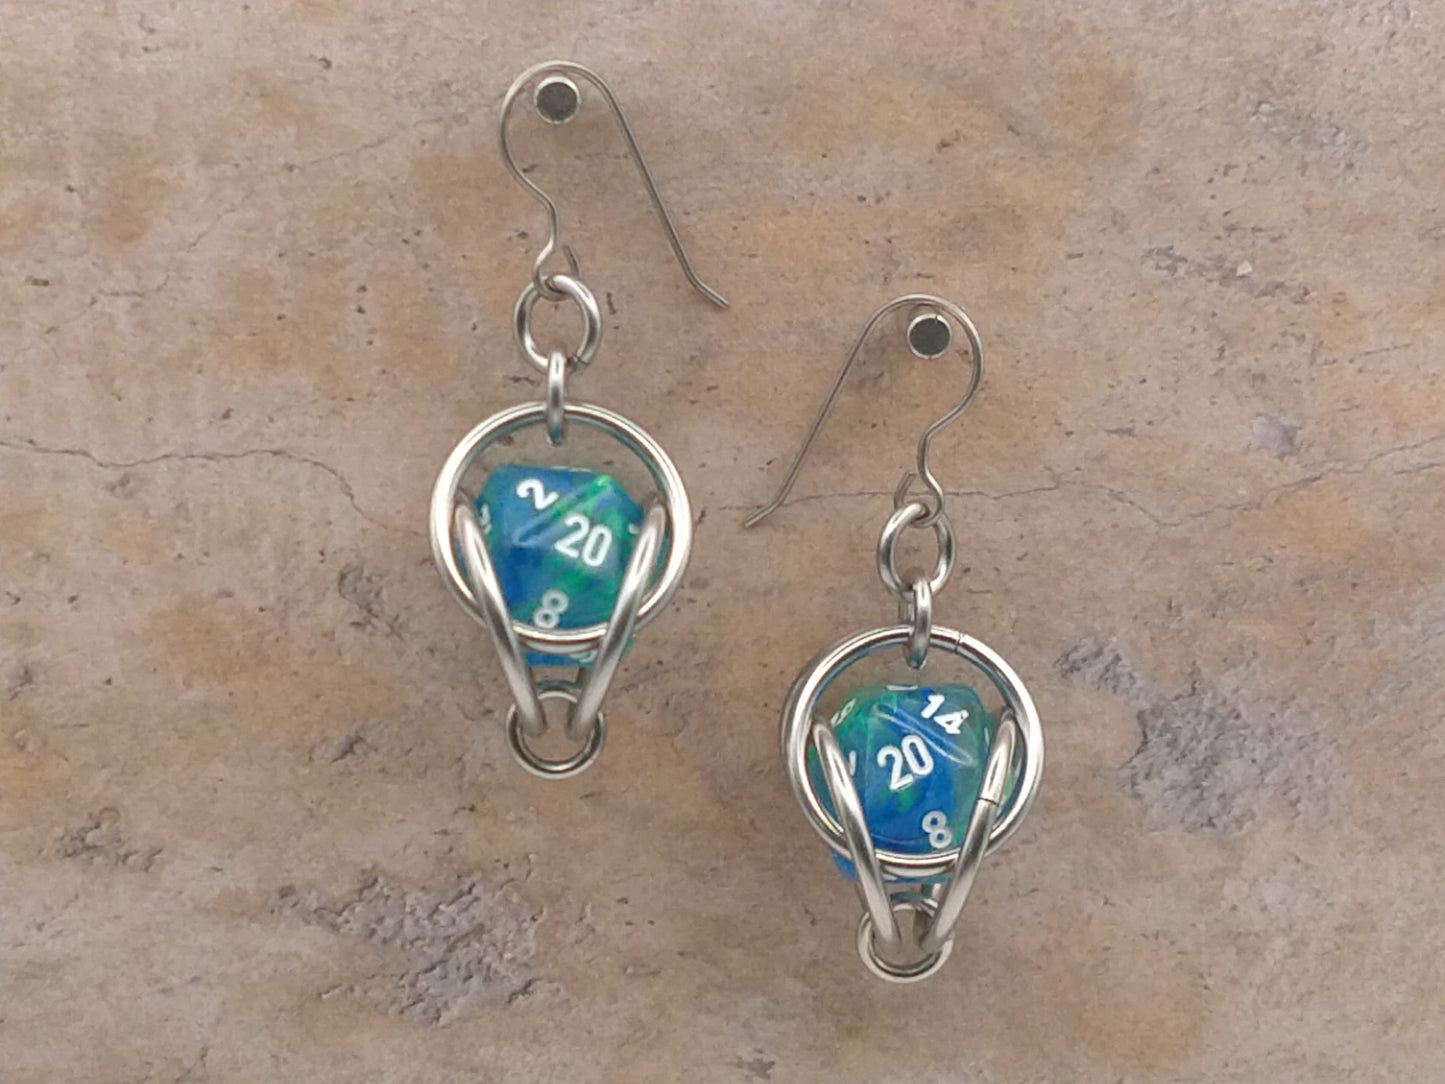 Andromeda mini dice earrings